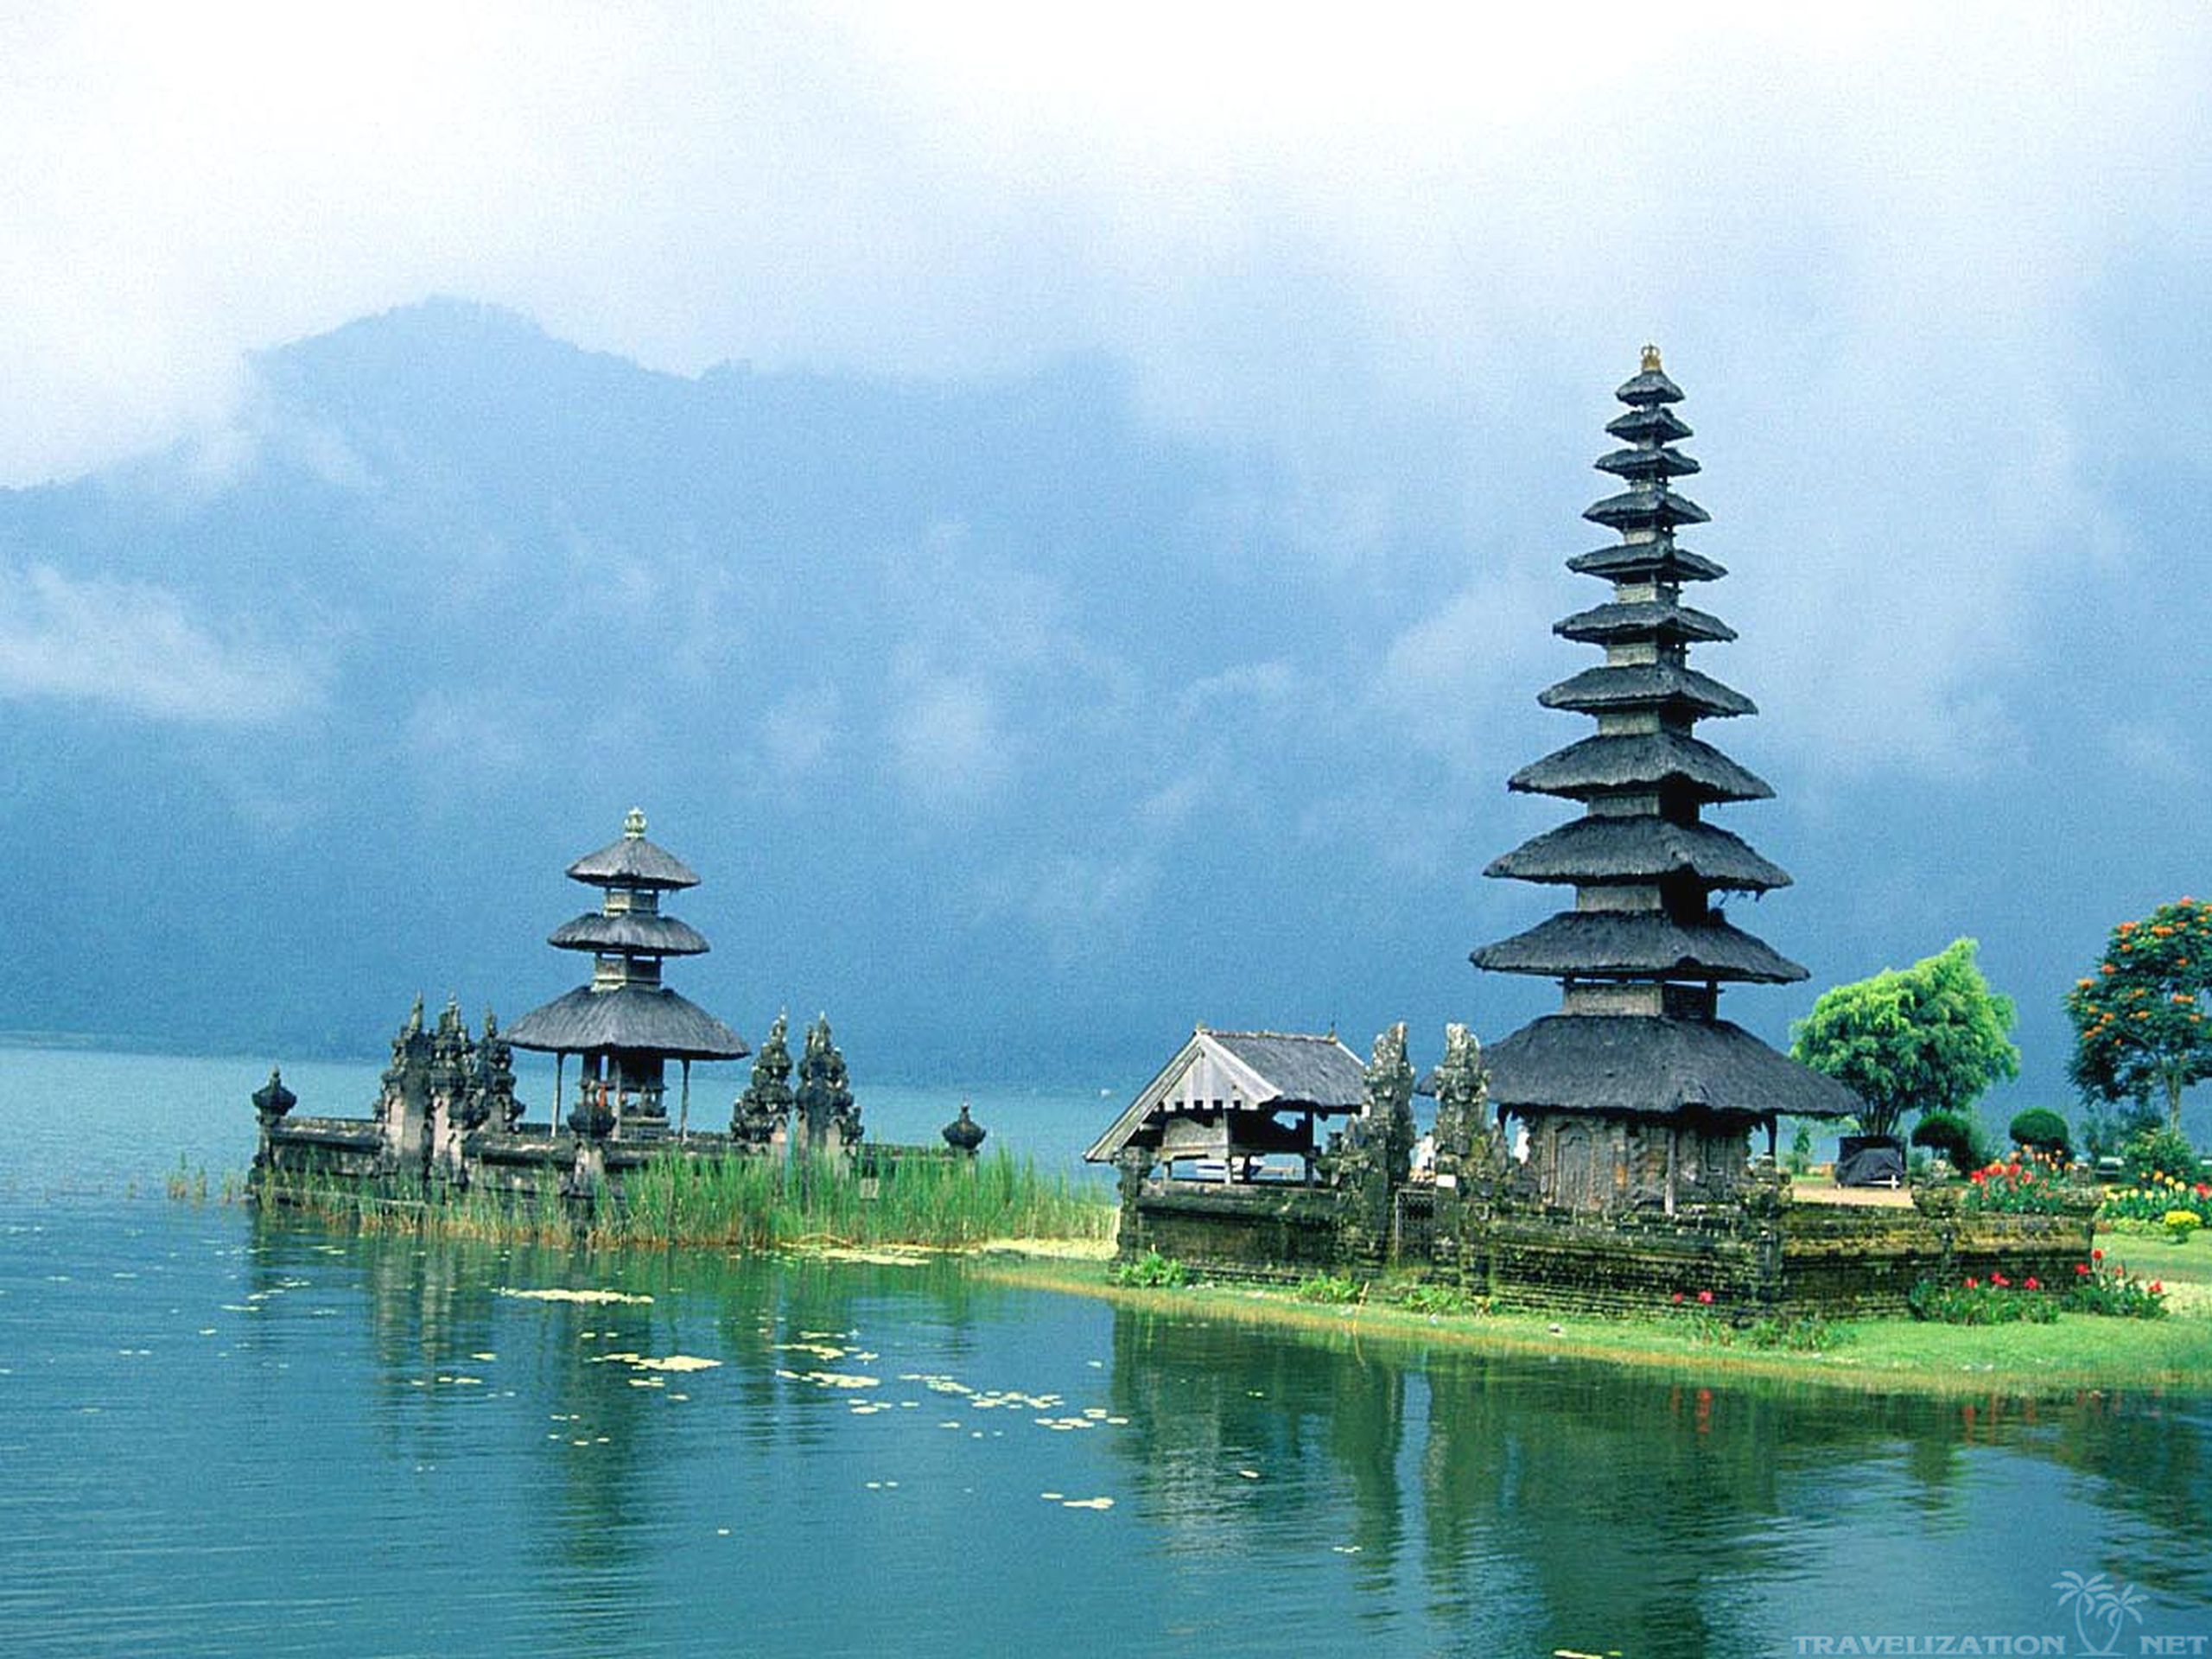 Bali | Link to Destination Holidays